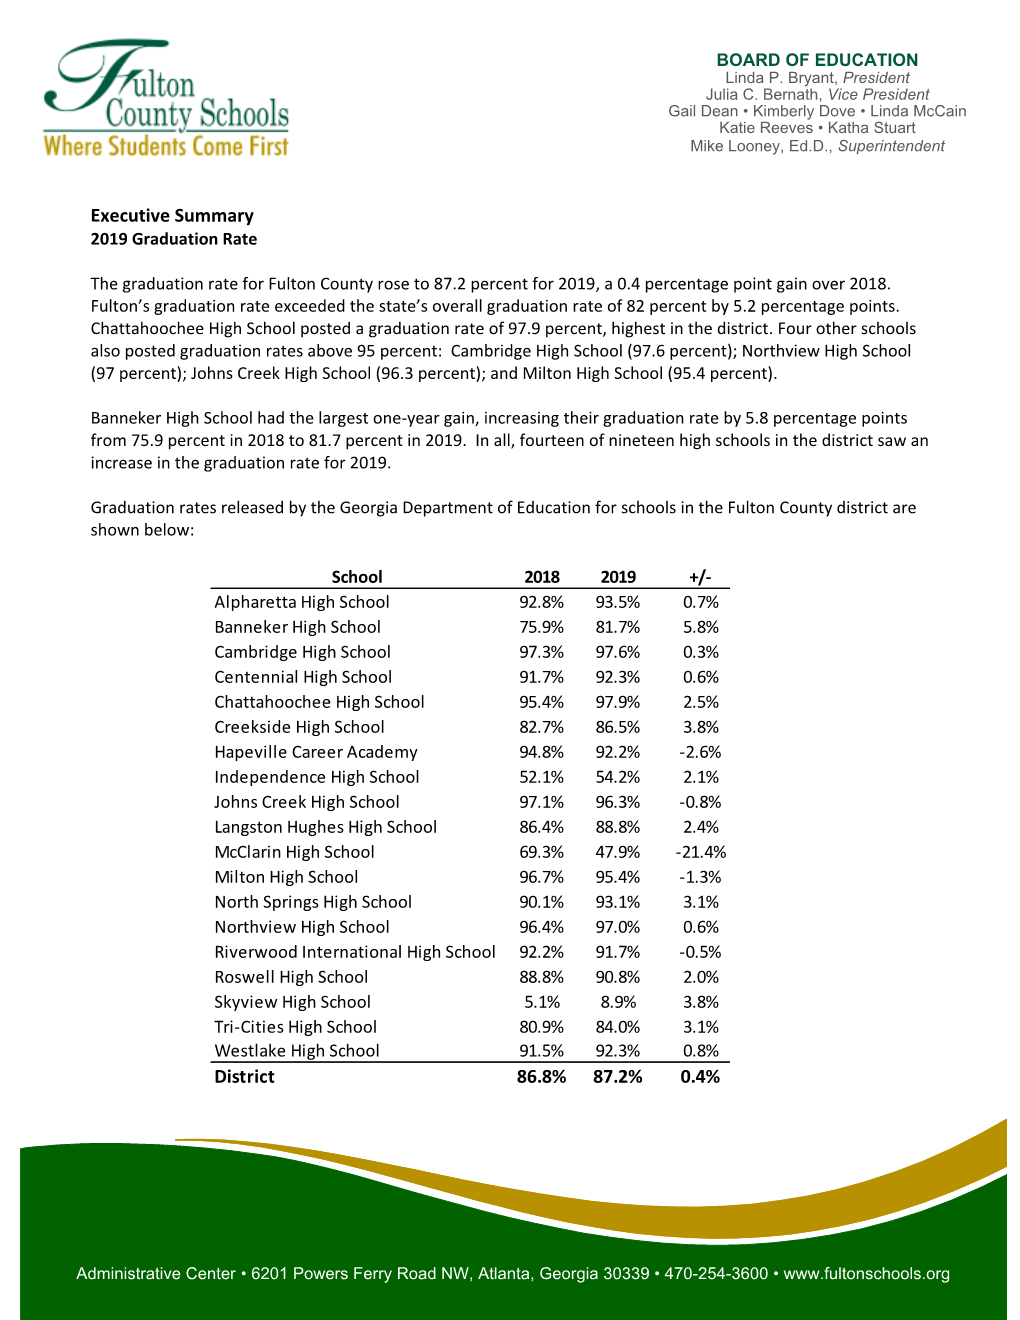 Executive Summary 2019 Graduation Rate